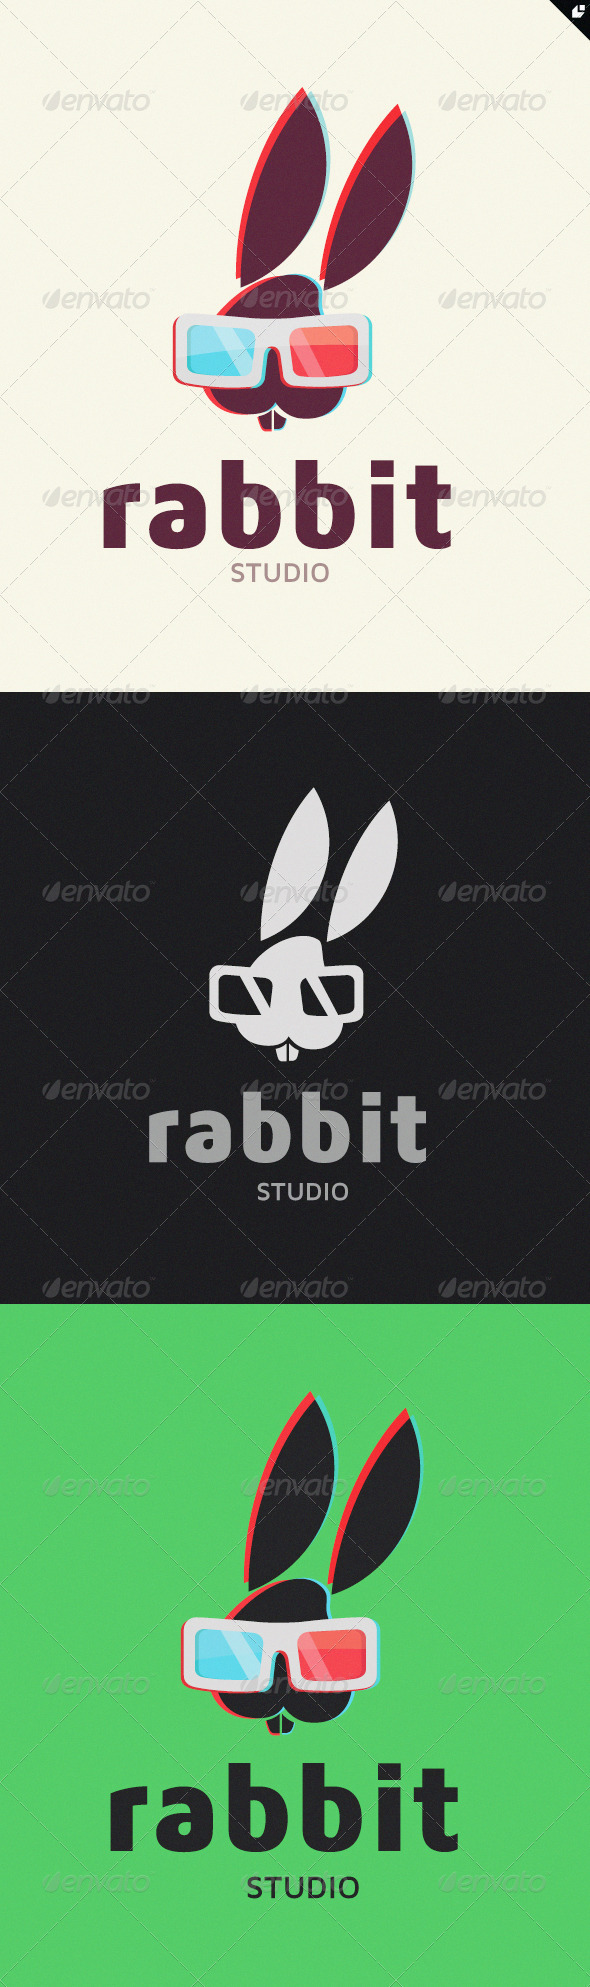 Rabbit Studio Logo